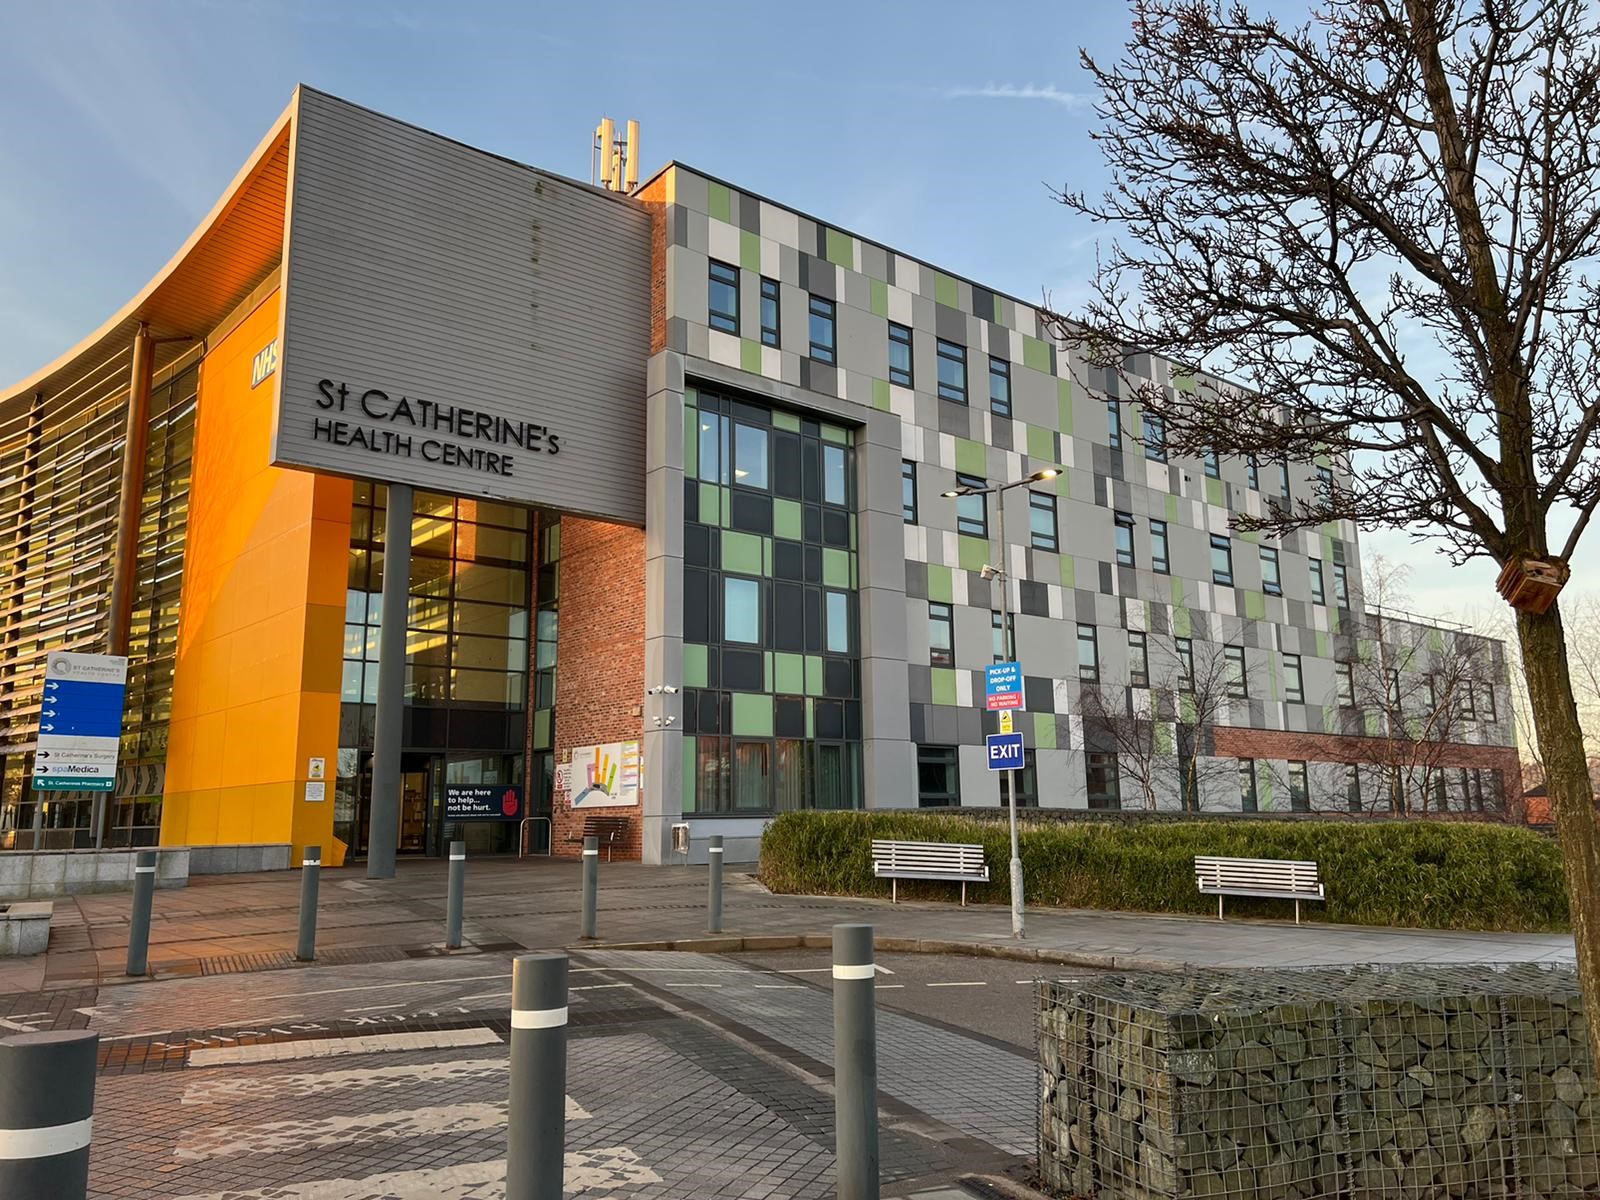 St Catherine's Health Centre